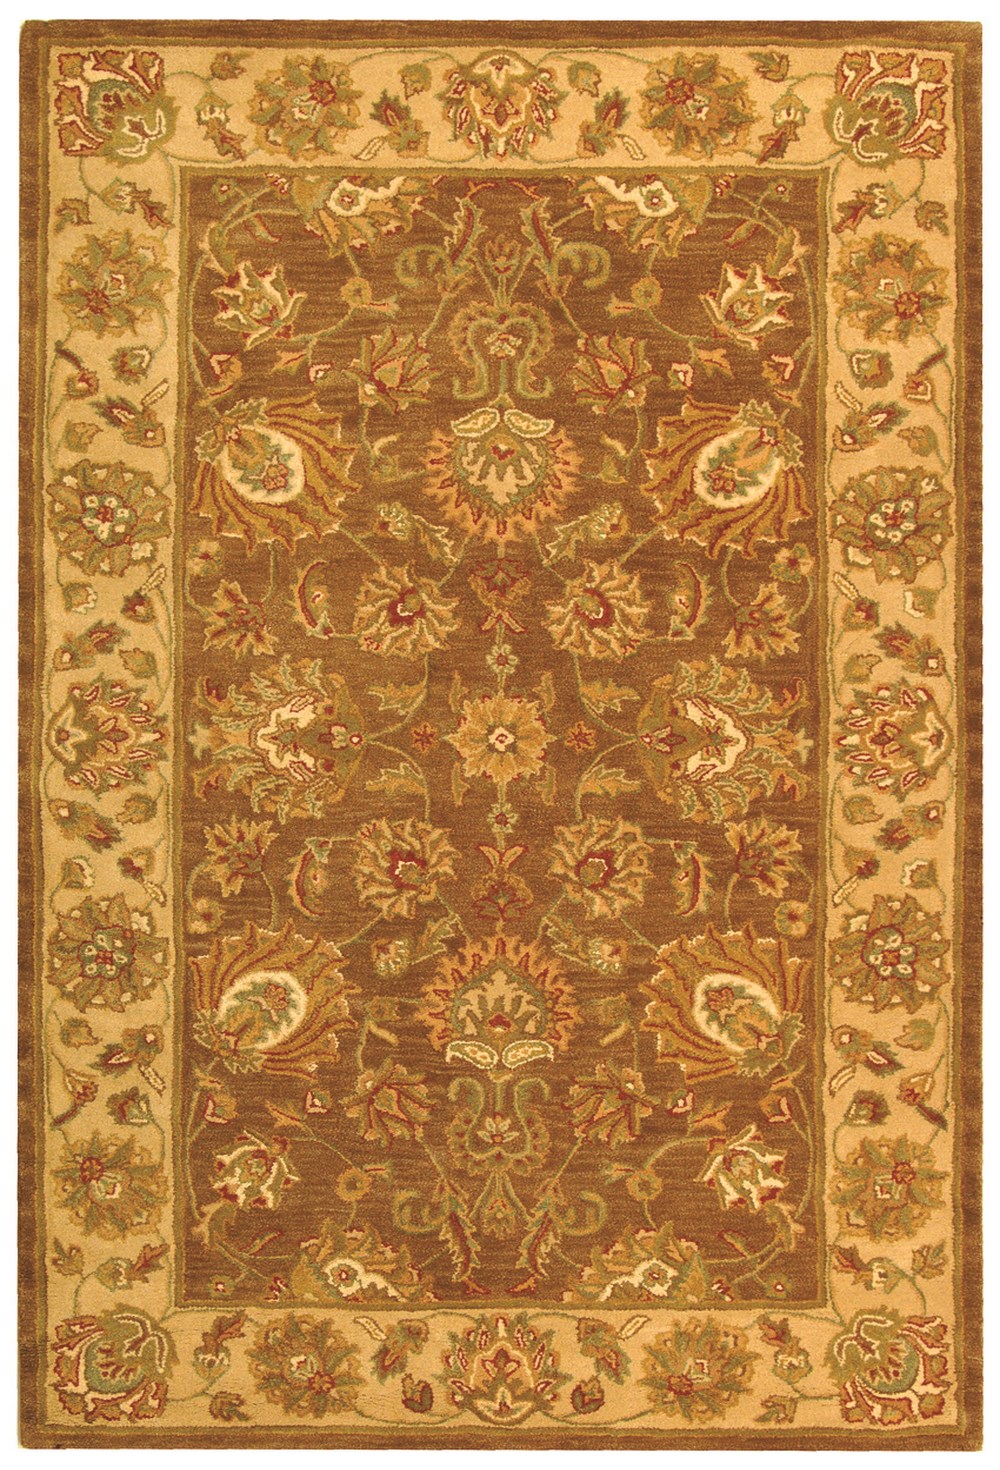 SAFAVIEH Heritage Regis Traditional Wool Area Rug, Brown/Ivory, 6' x 9' - image 1 of 4